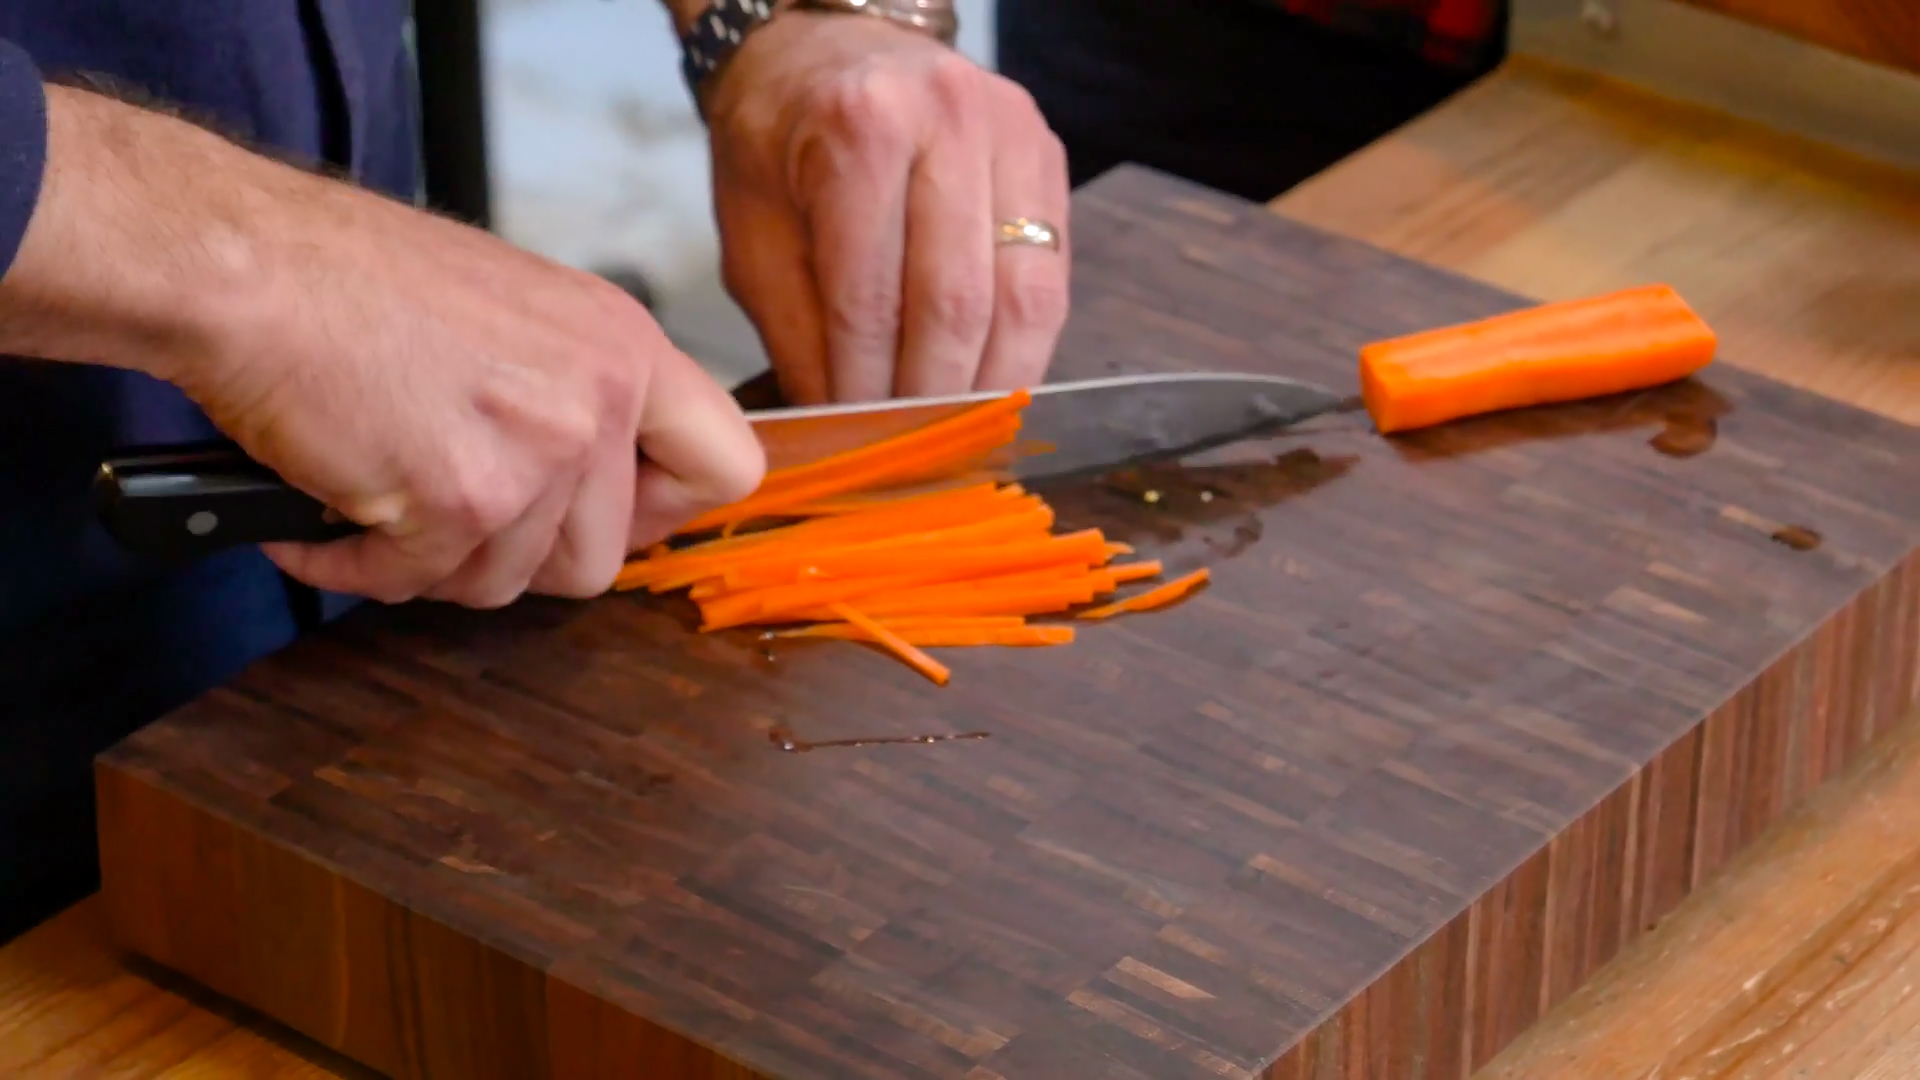 The Original Split Tip Citrus Knife 